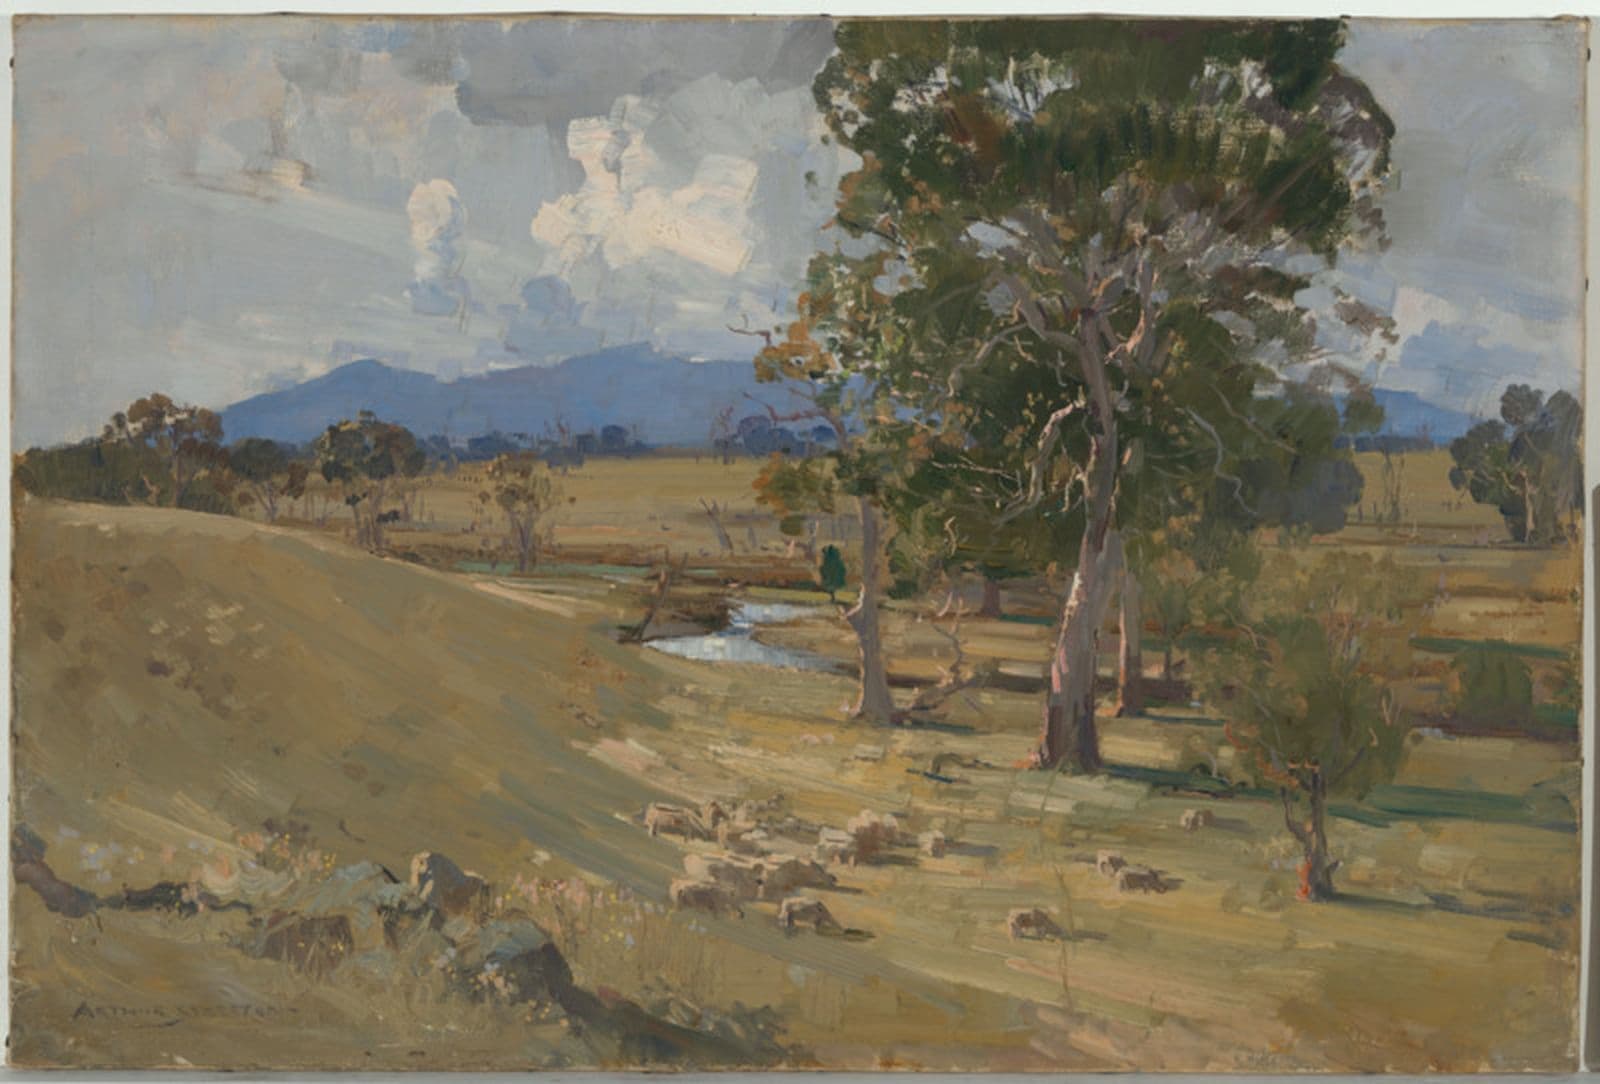 Impressionistic painting of Australian landscape